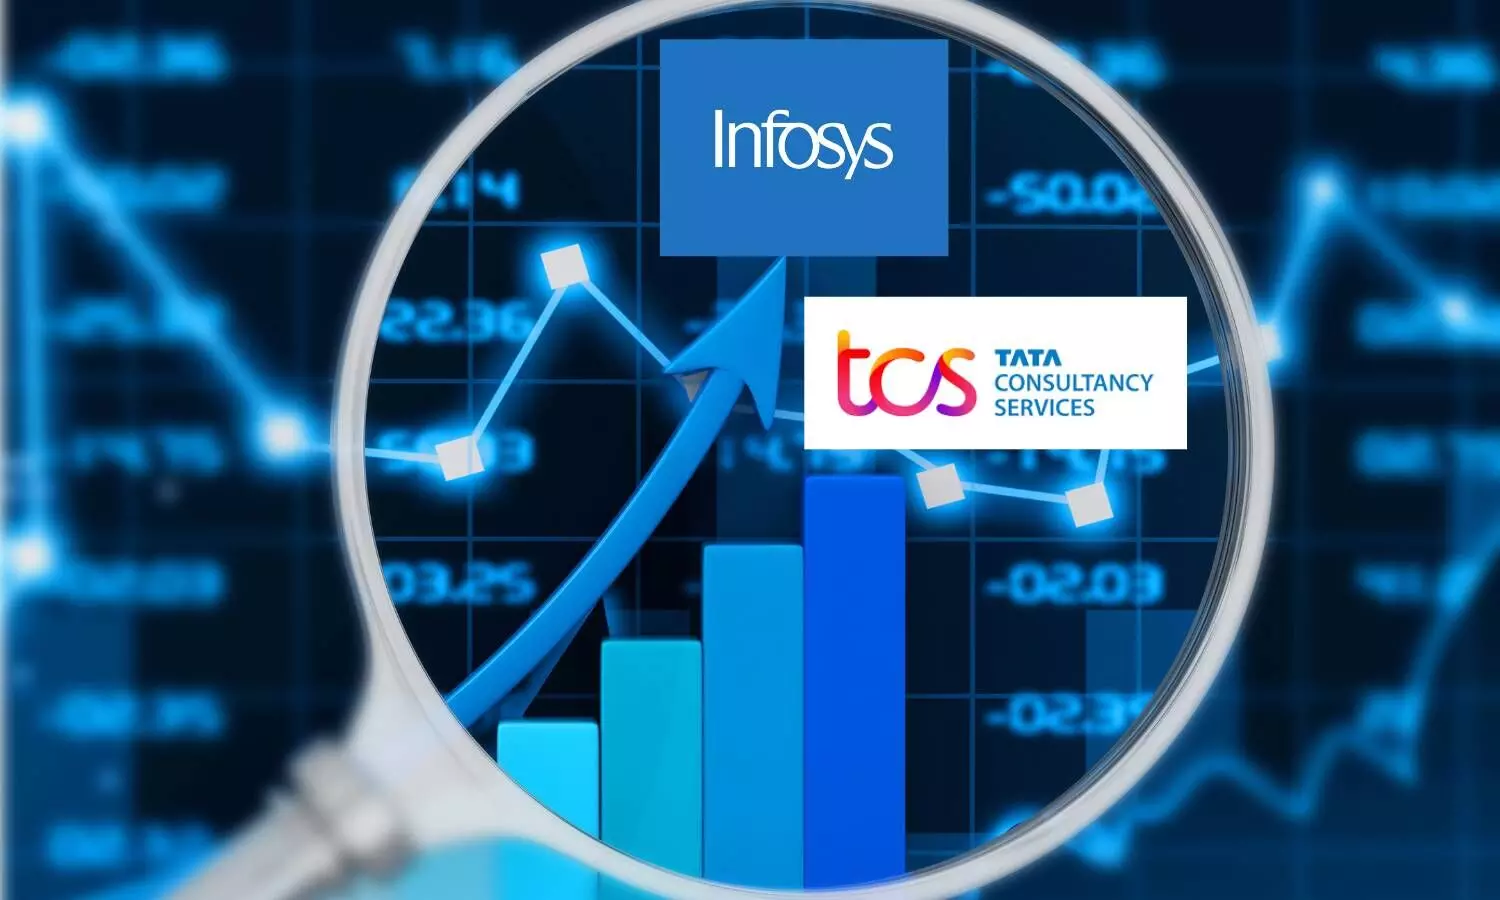 Market graph, Infosys & TCS logo